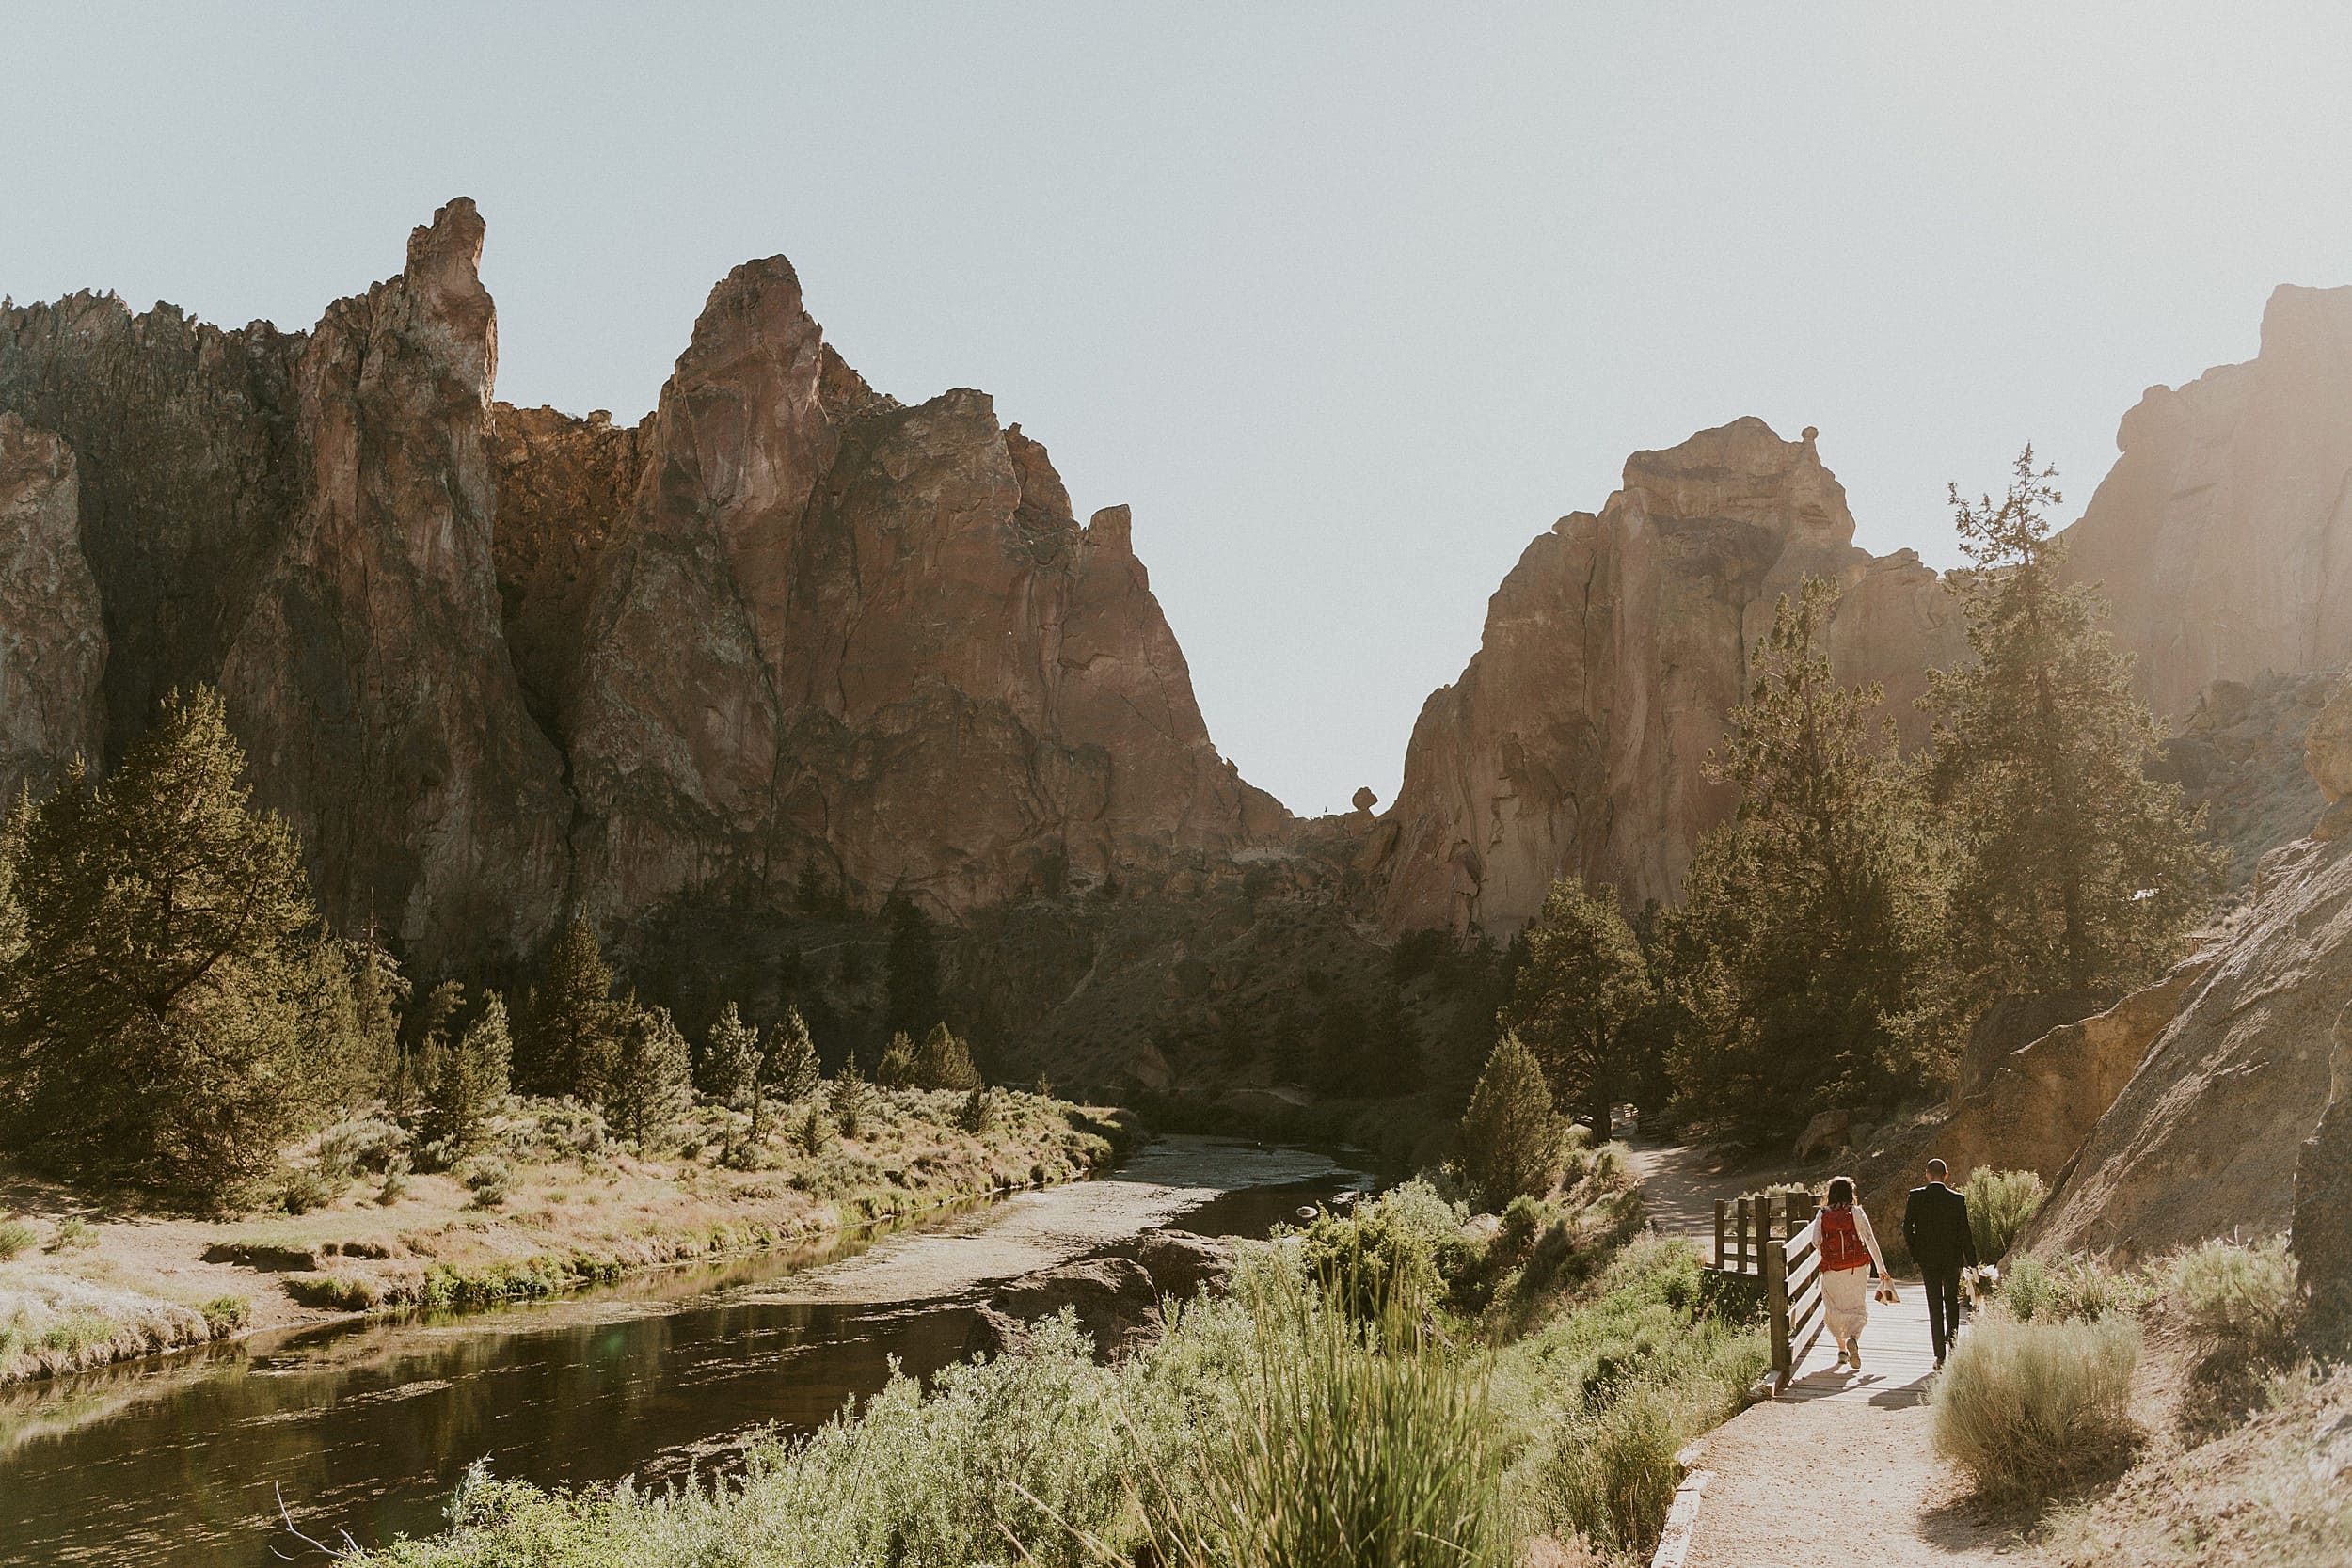 bride and groom hiking together smith rock state park landscape

